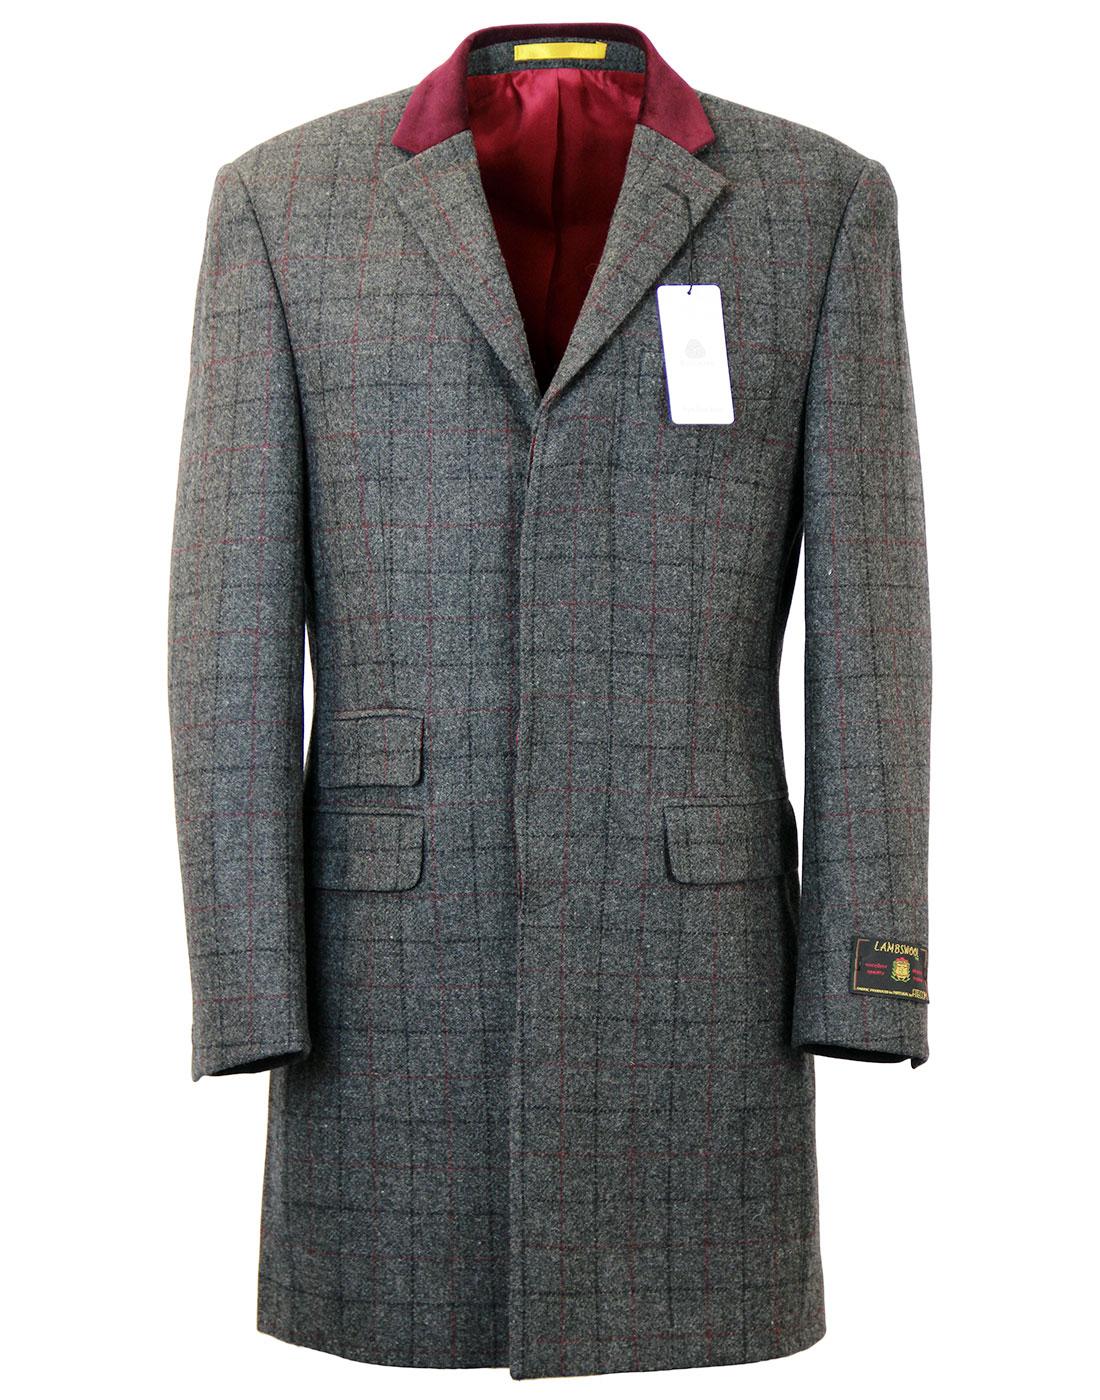 1960s Mod Double Overcheck 3/4 Length Dress Coat